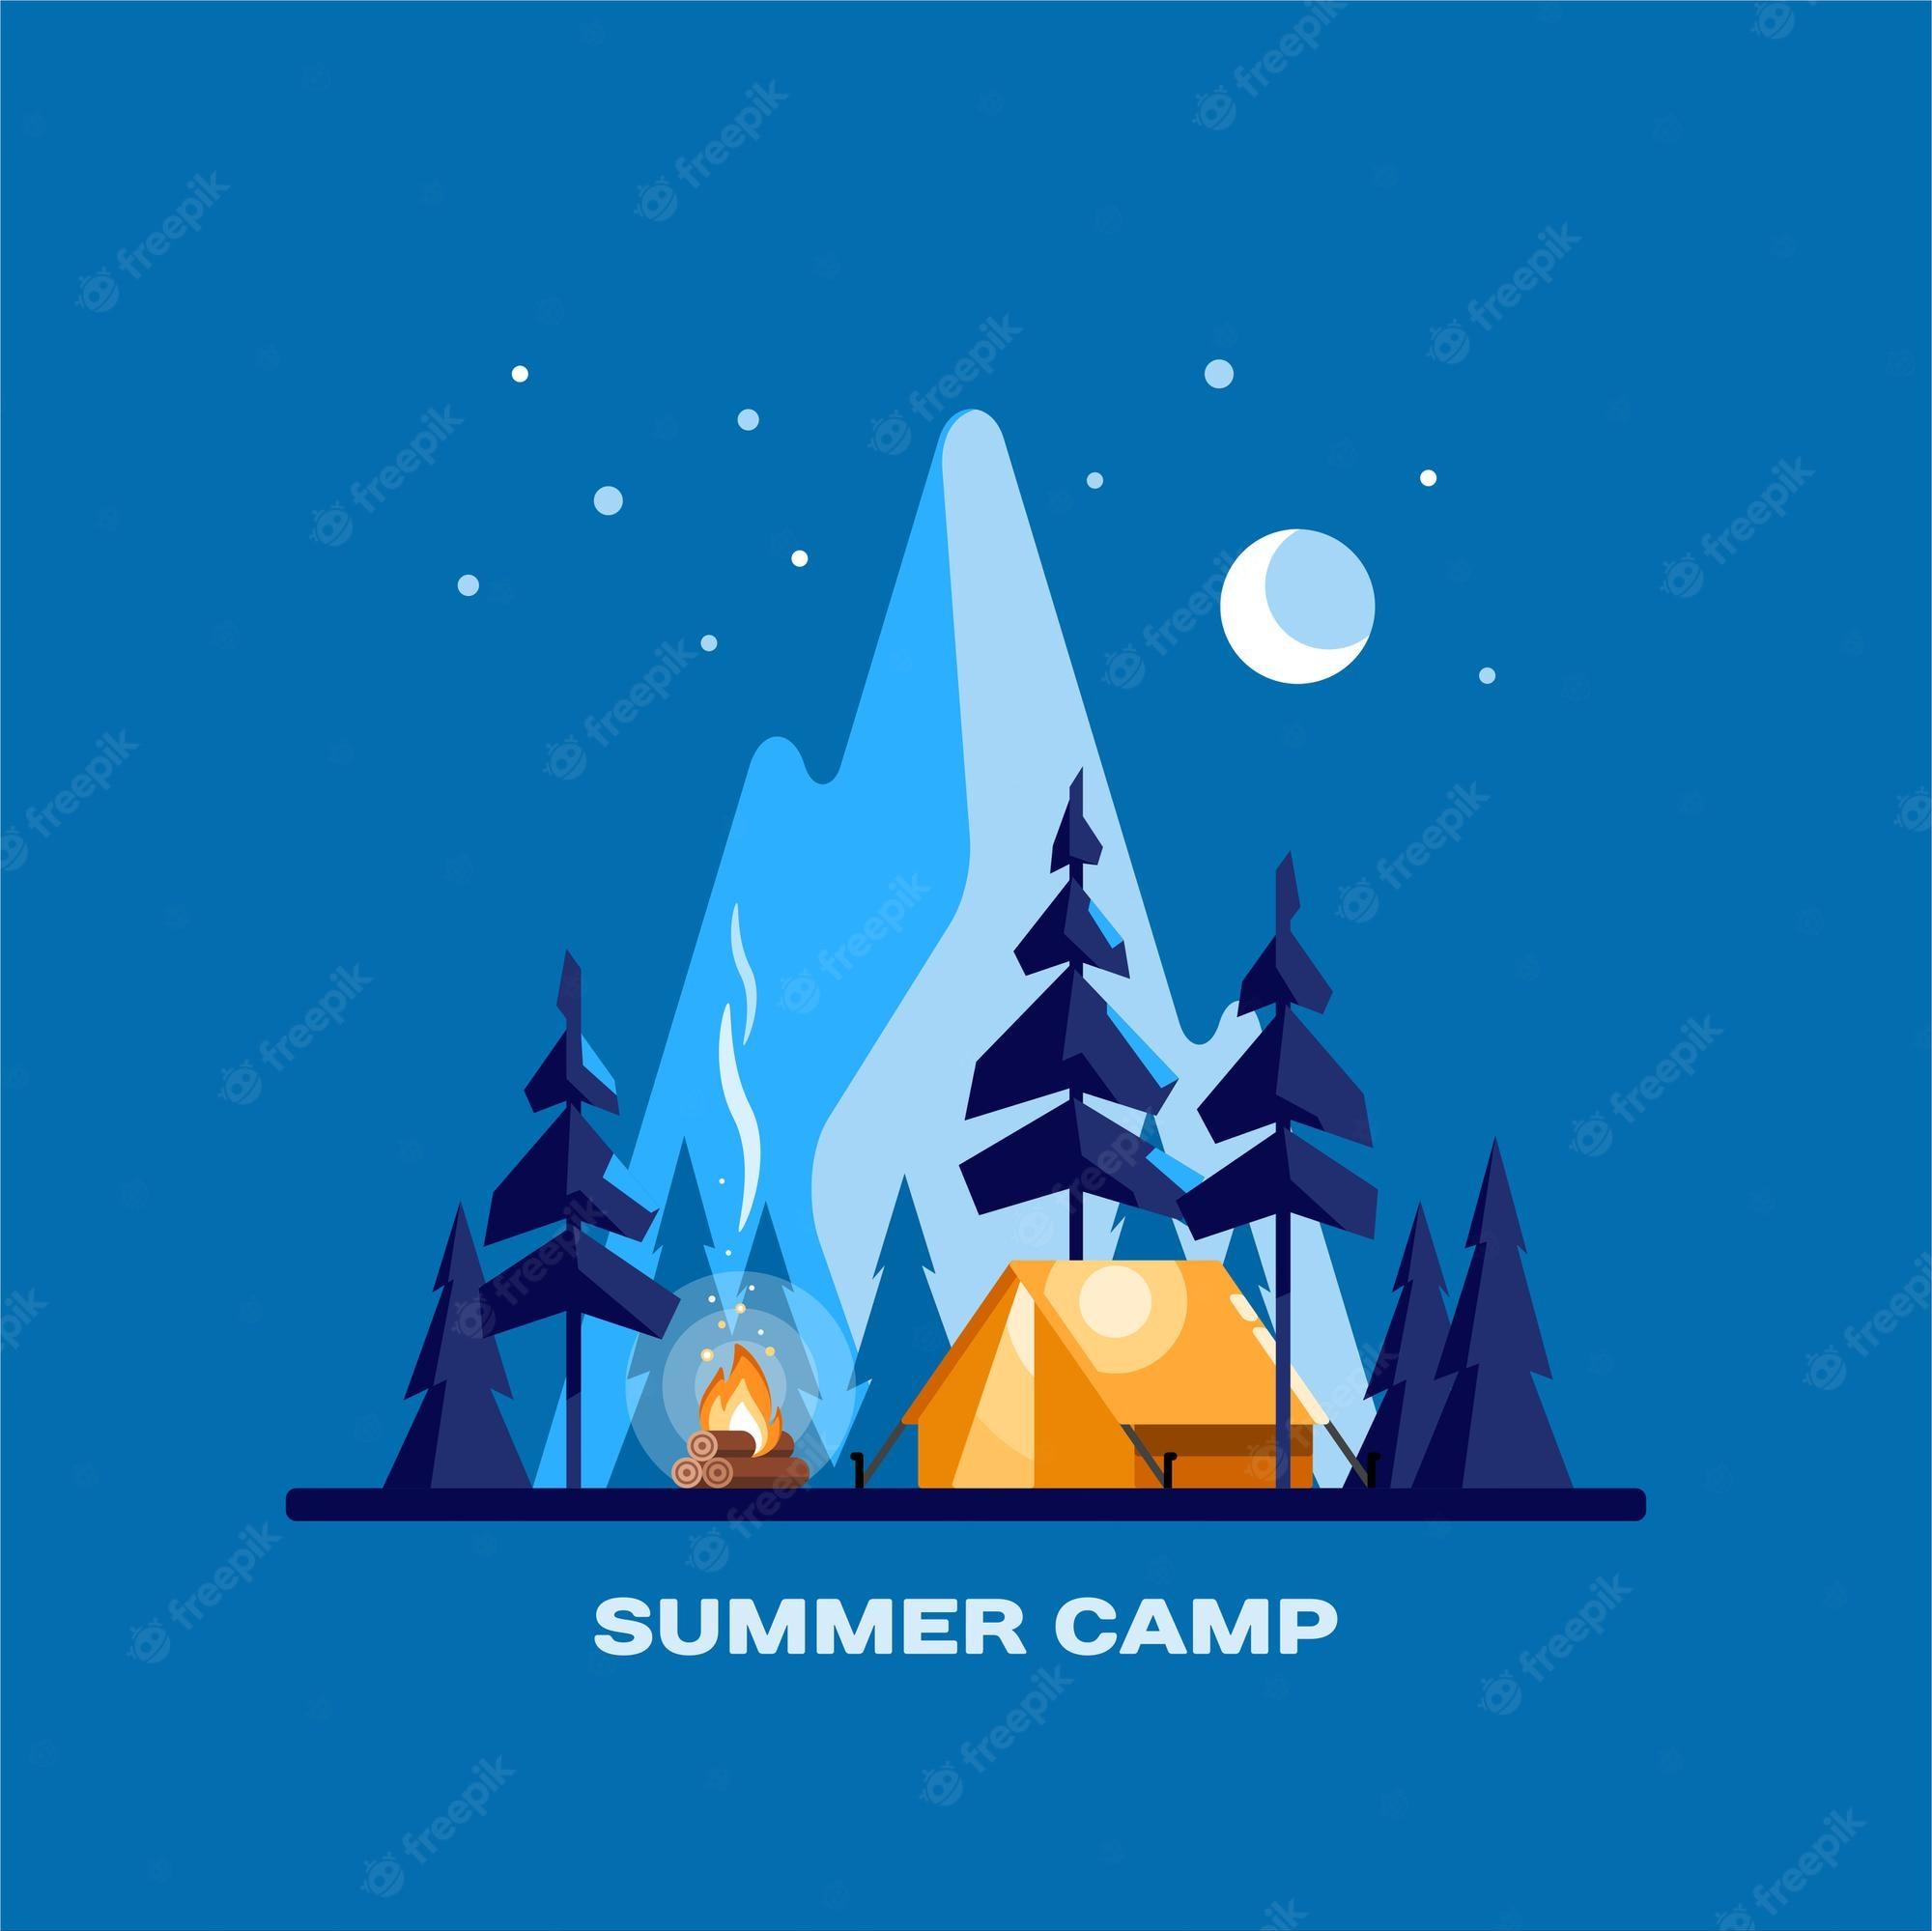 Premium Vector Summer Camp Night Landscape With Illuminated